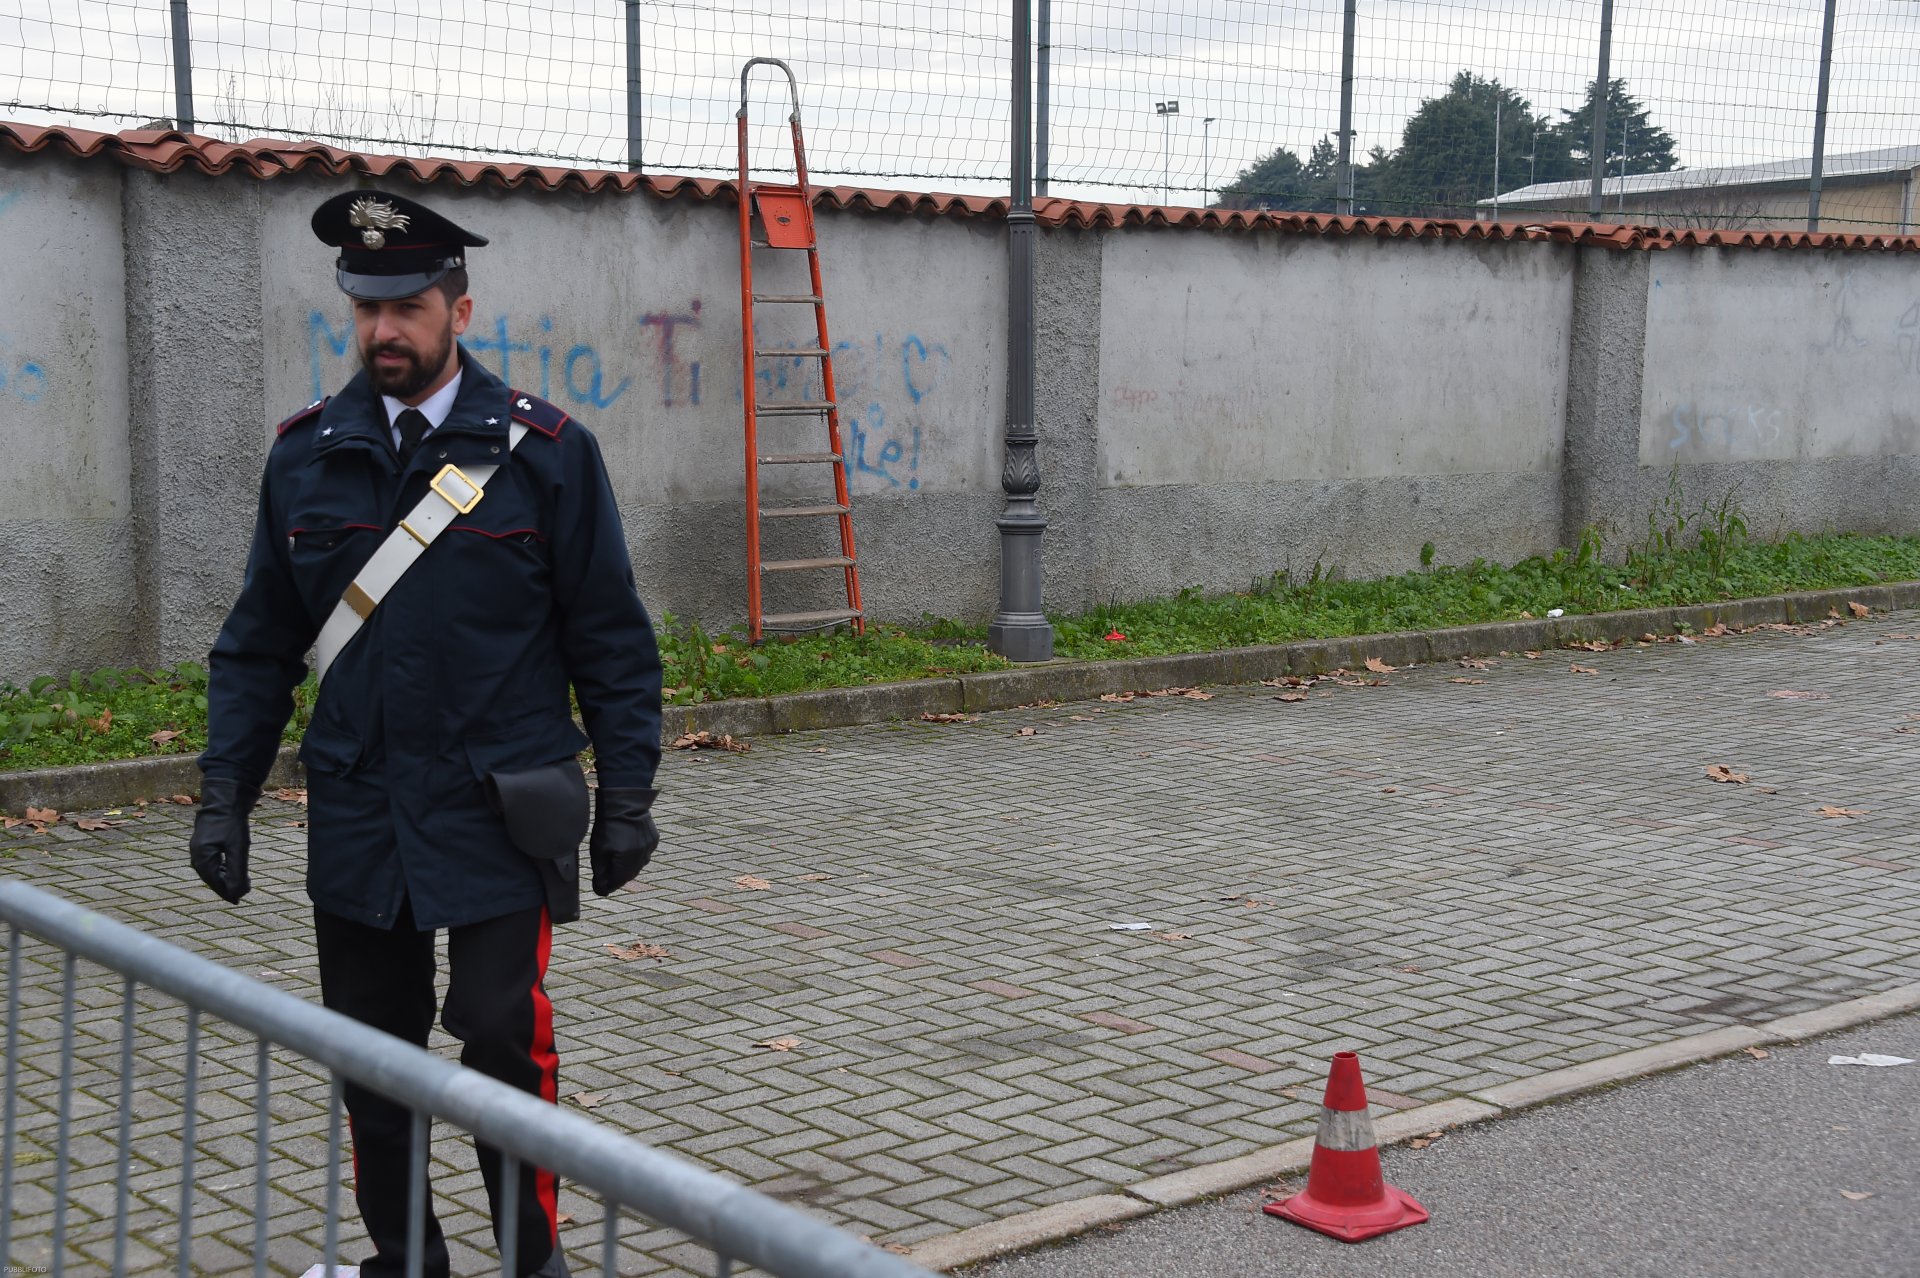 bomba carta artificeri-1816Artificeri dei Carabinieri fanno brillare bomba carta 03 01 2020